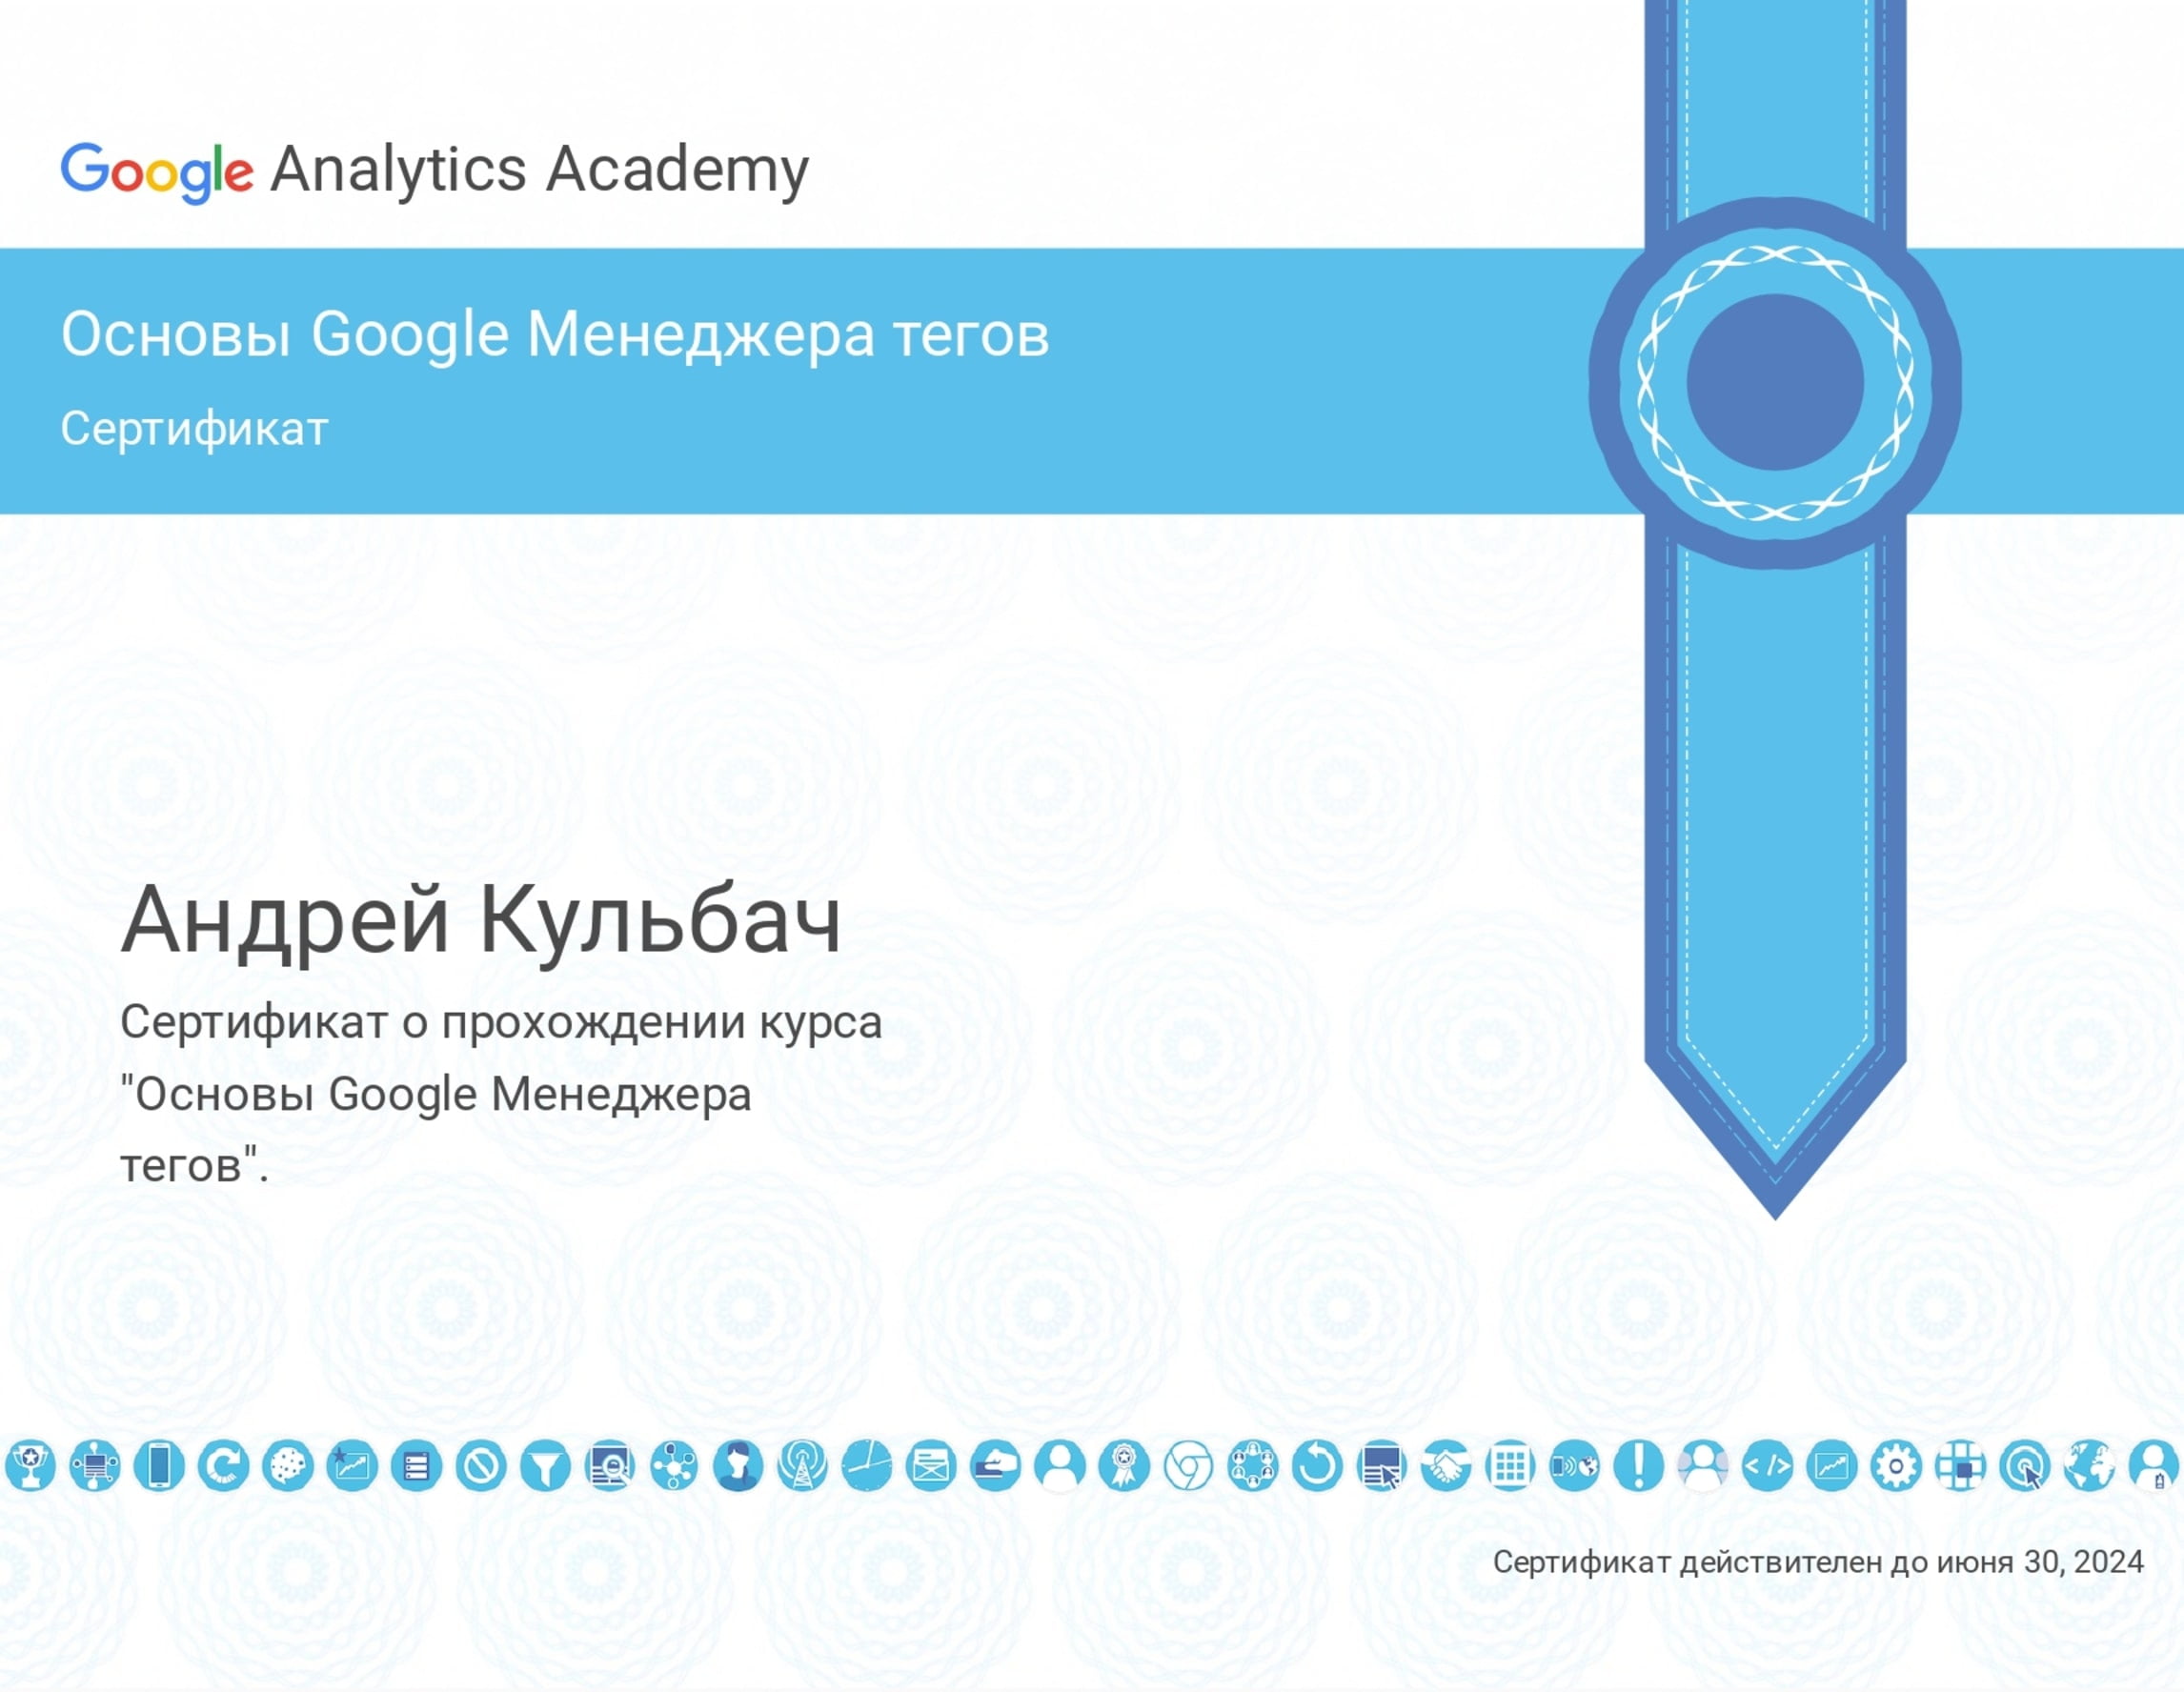 Андрей Кульбач - сертификат